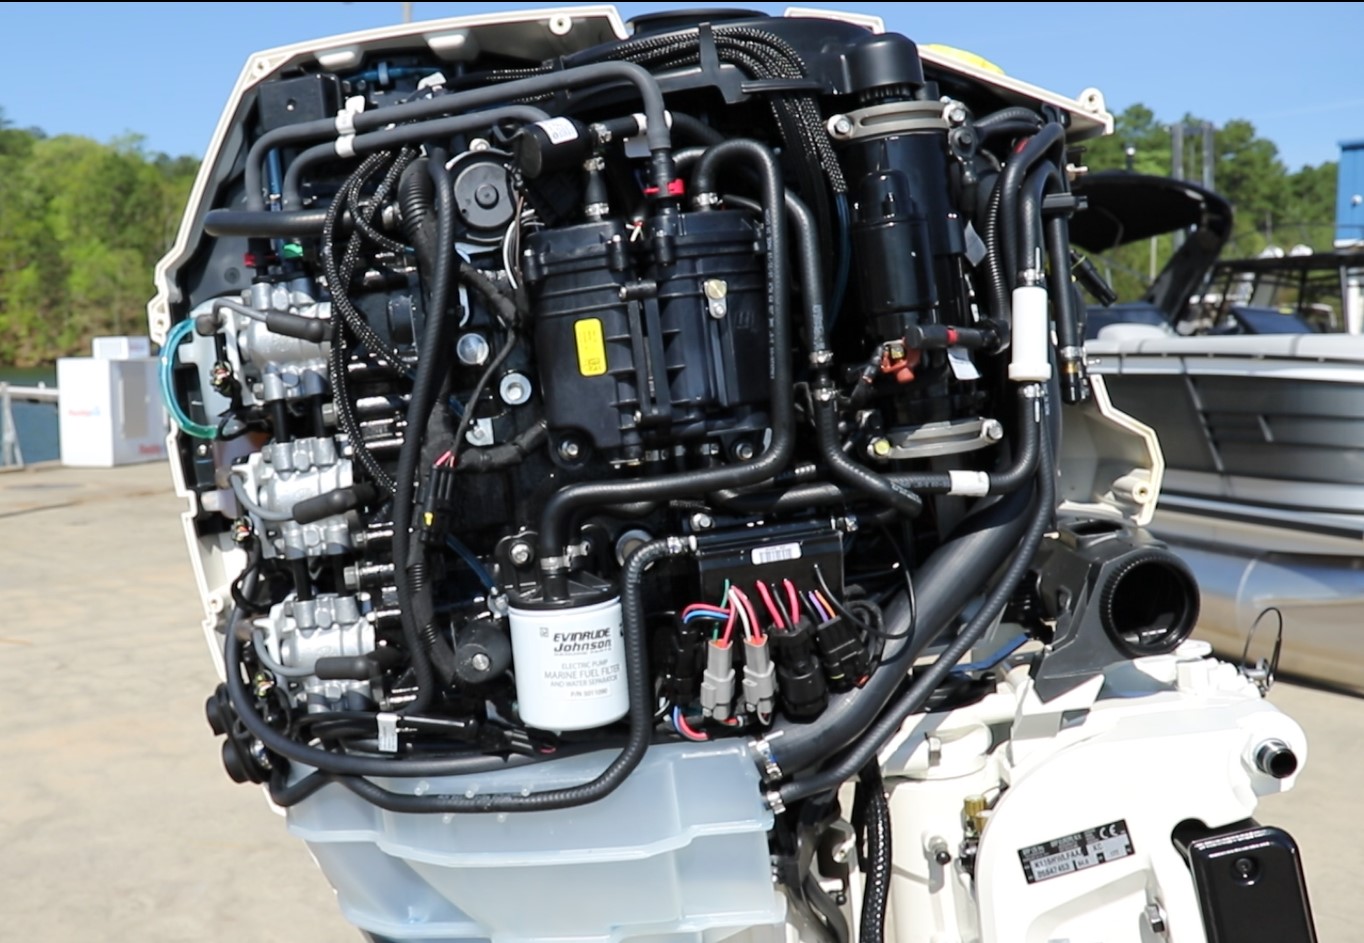 Inside engine